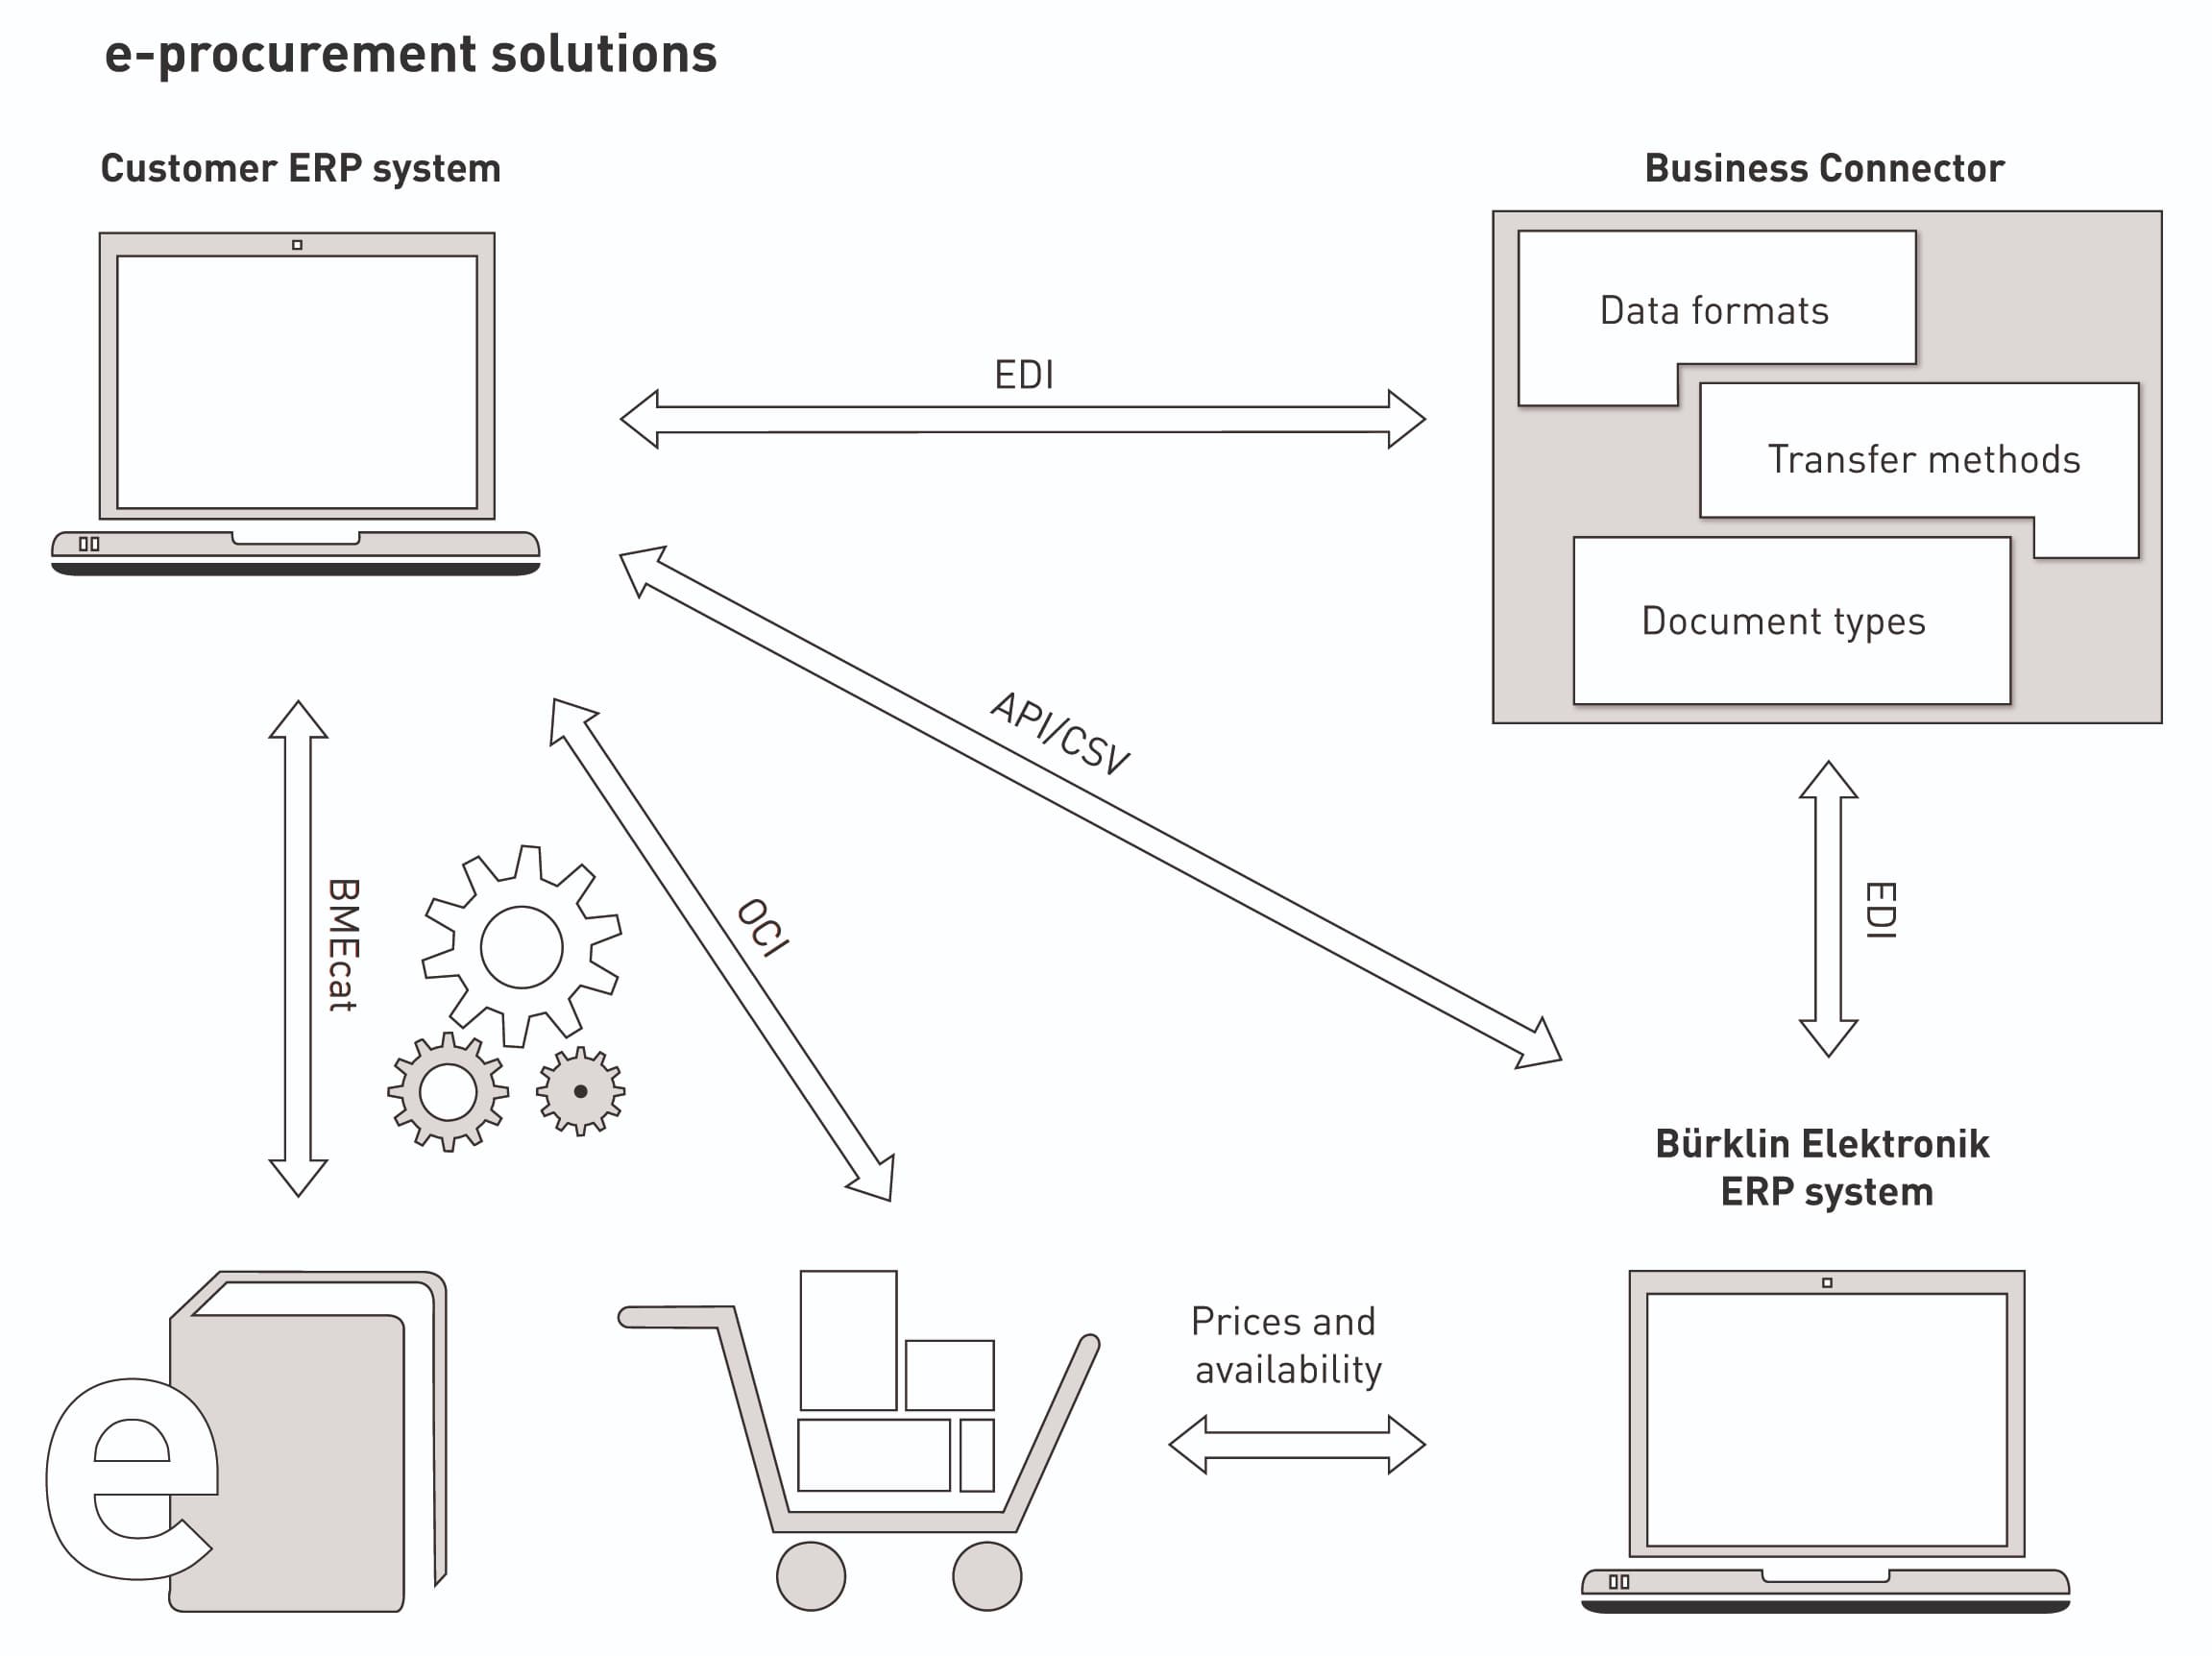 e-procurement solutions of Bürklin Elektronik